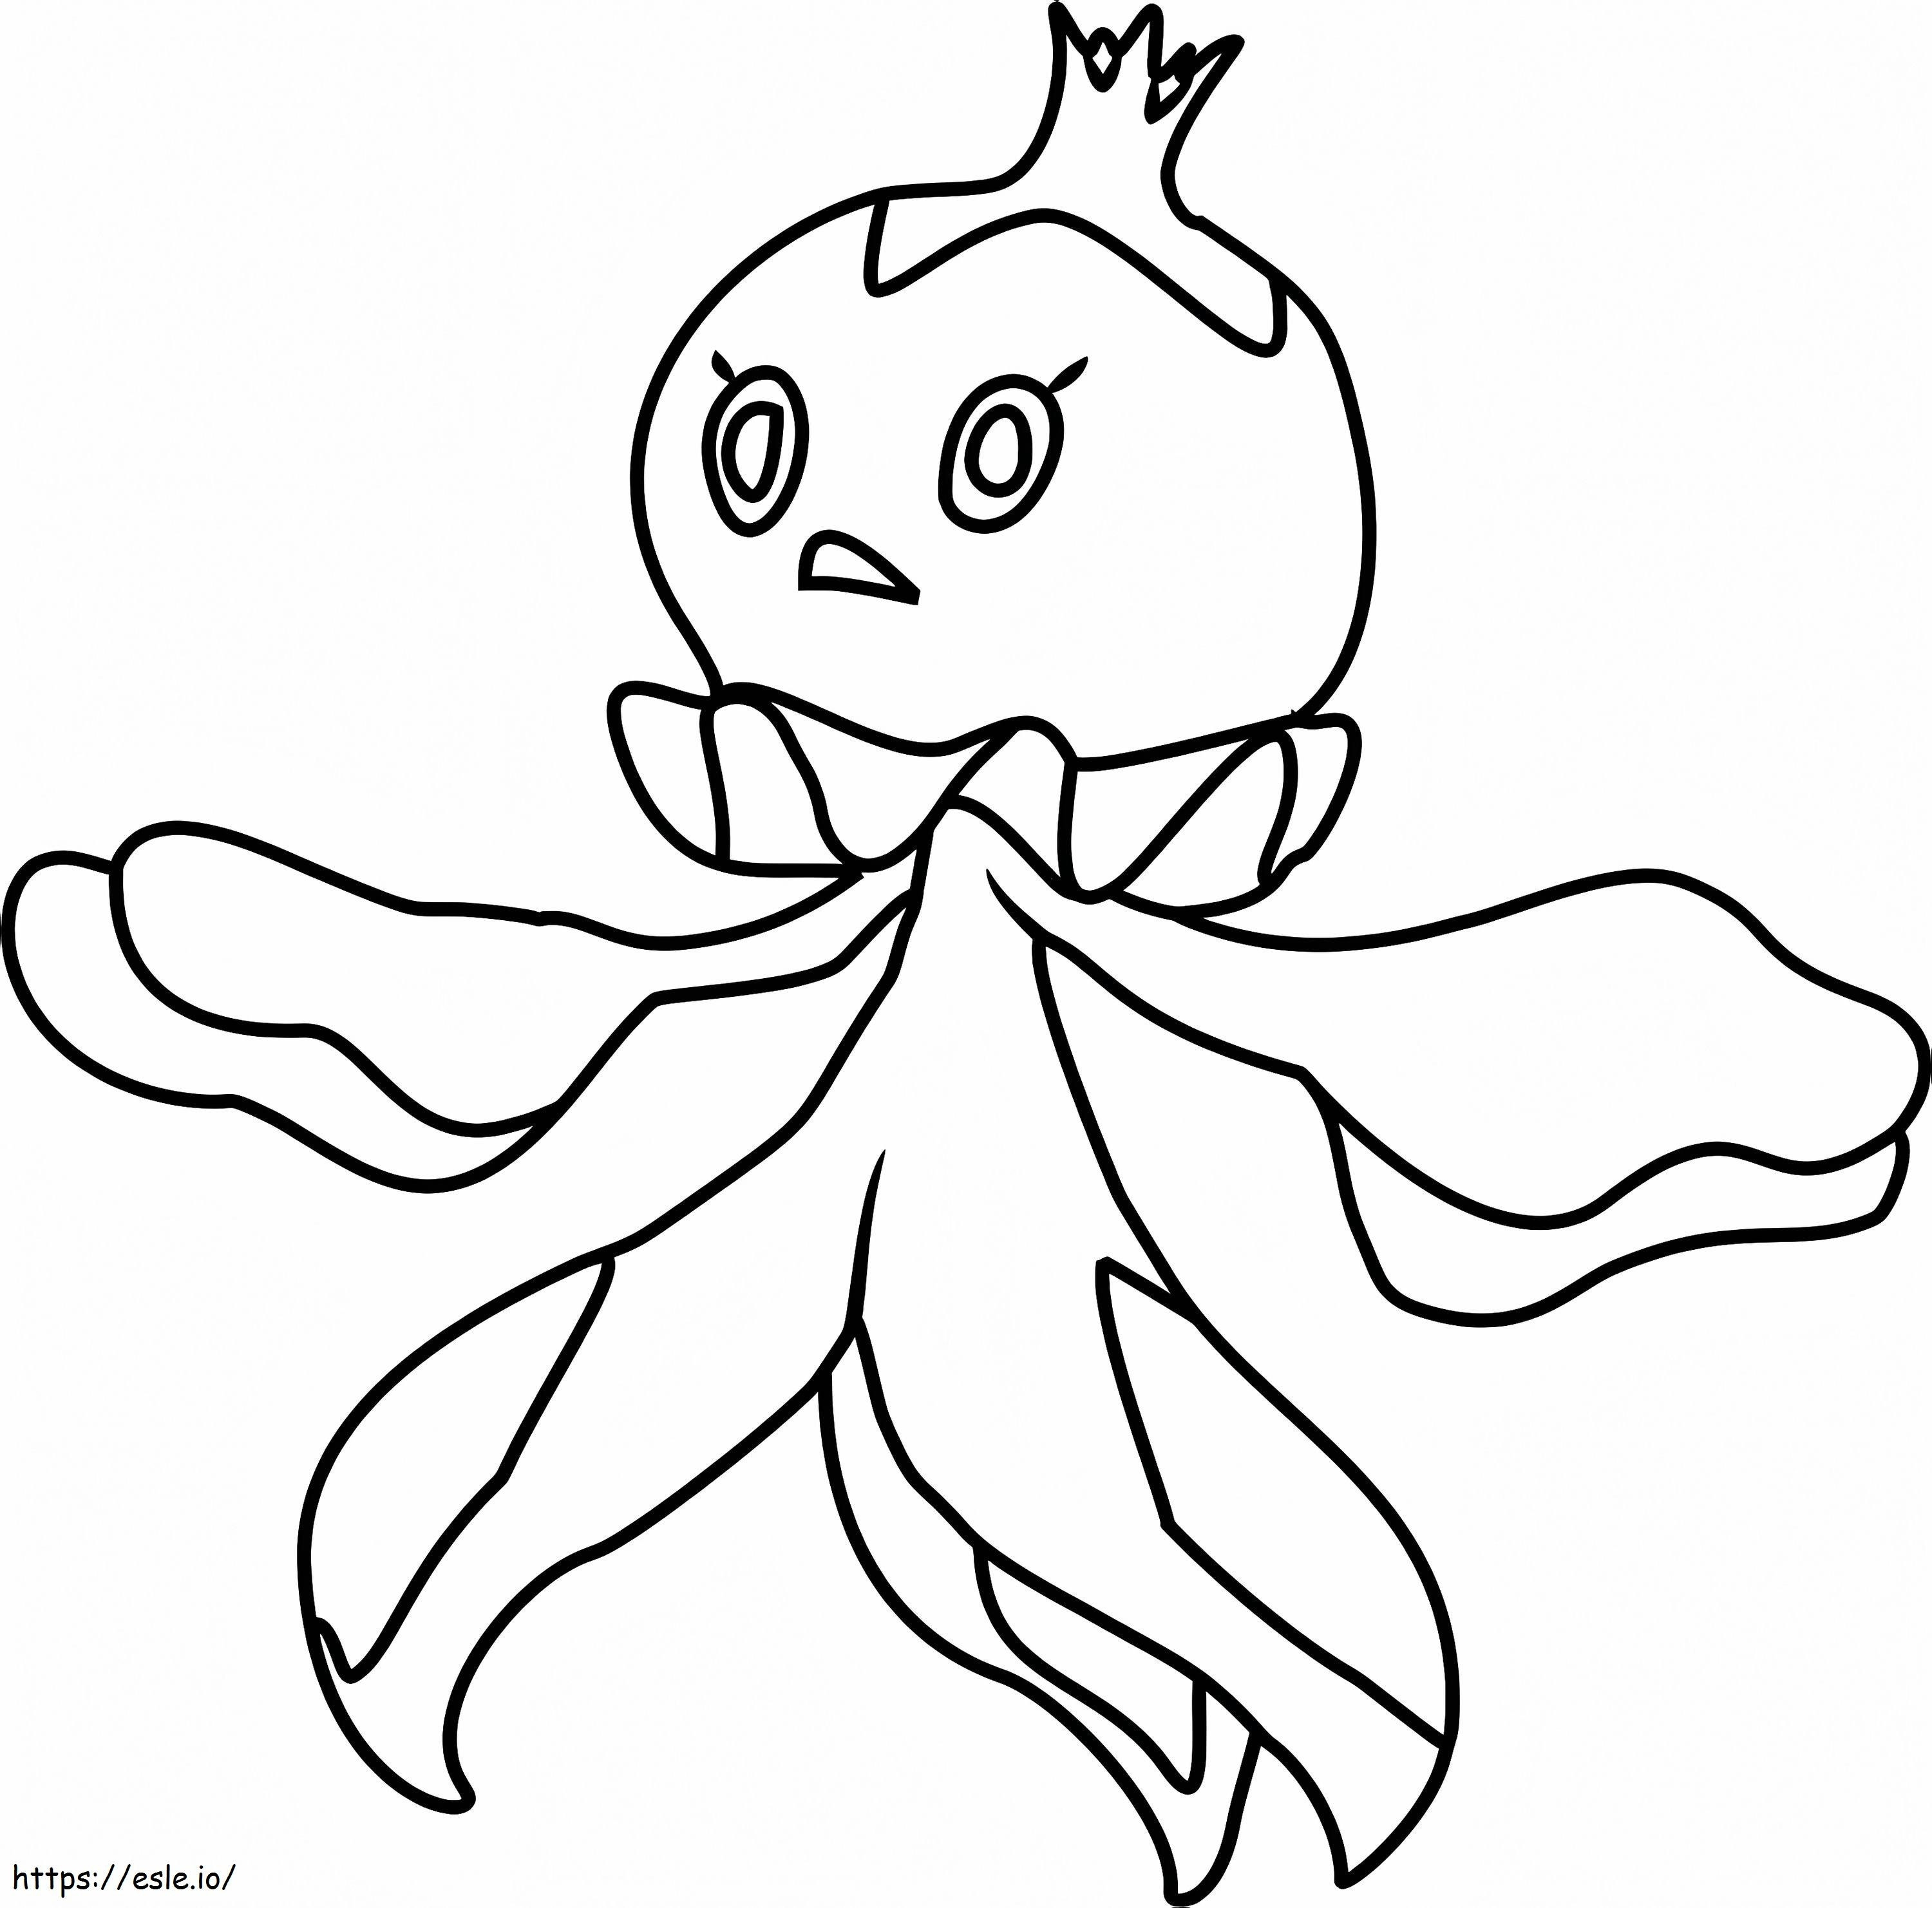 Frillish Pokemon coloring page